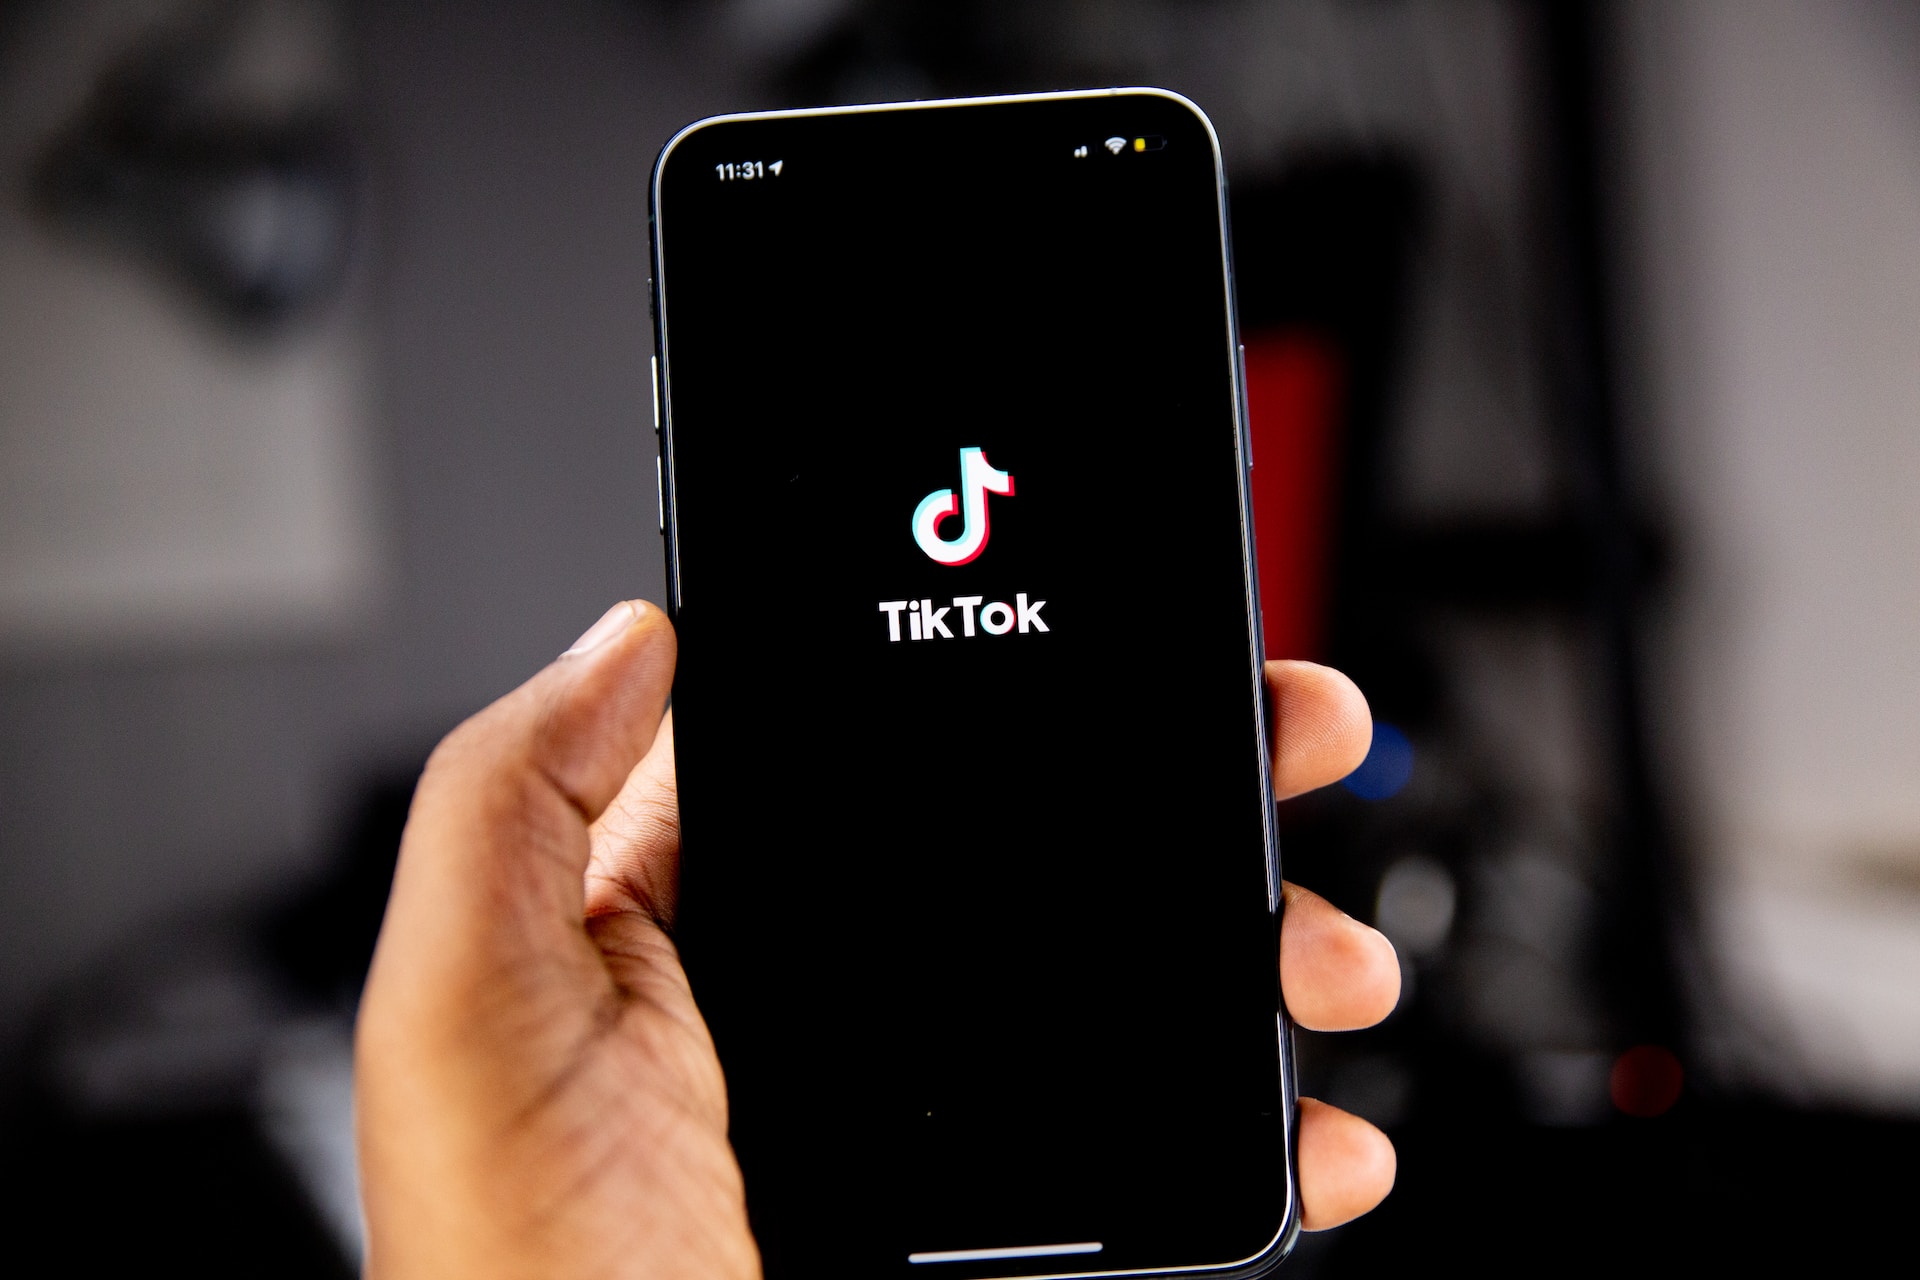 tiktok app on a phone